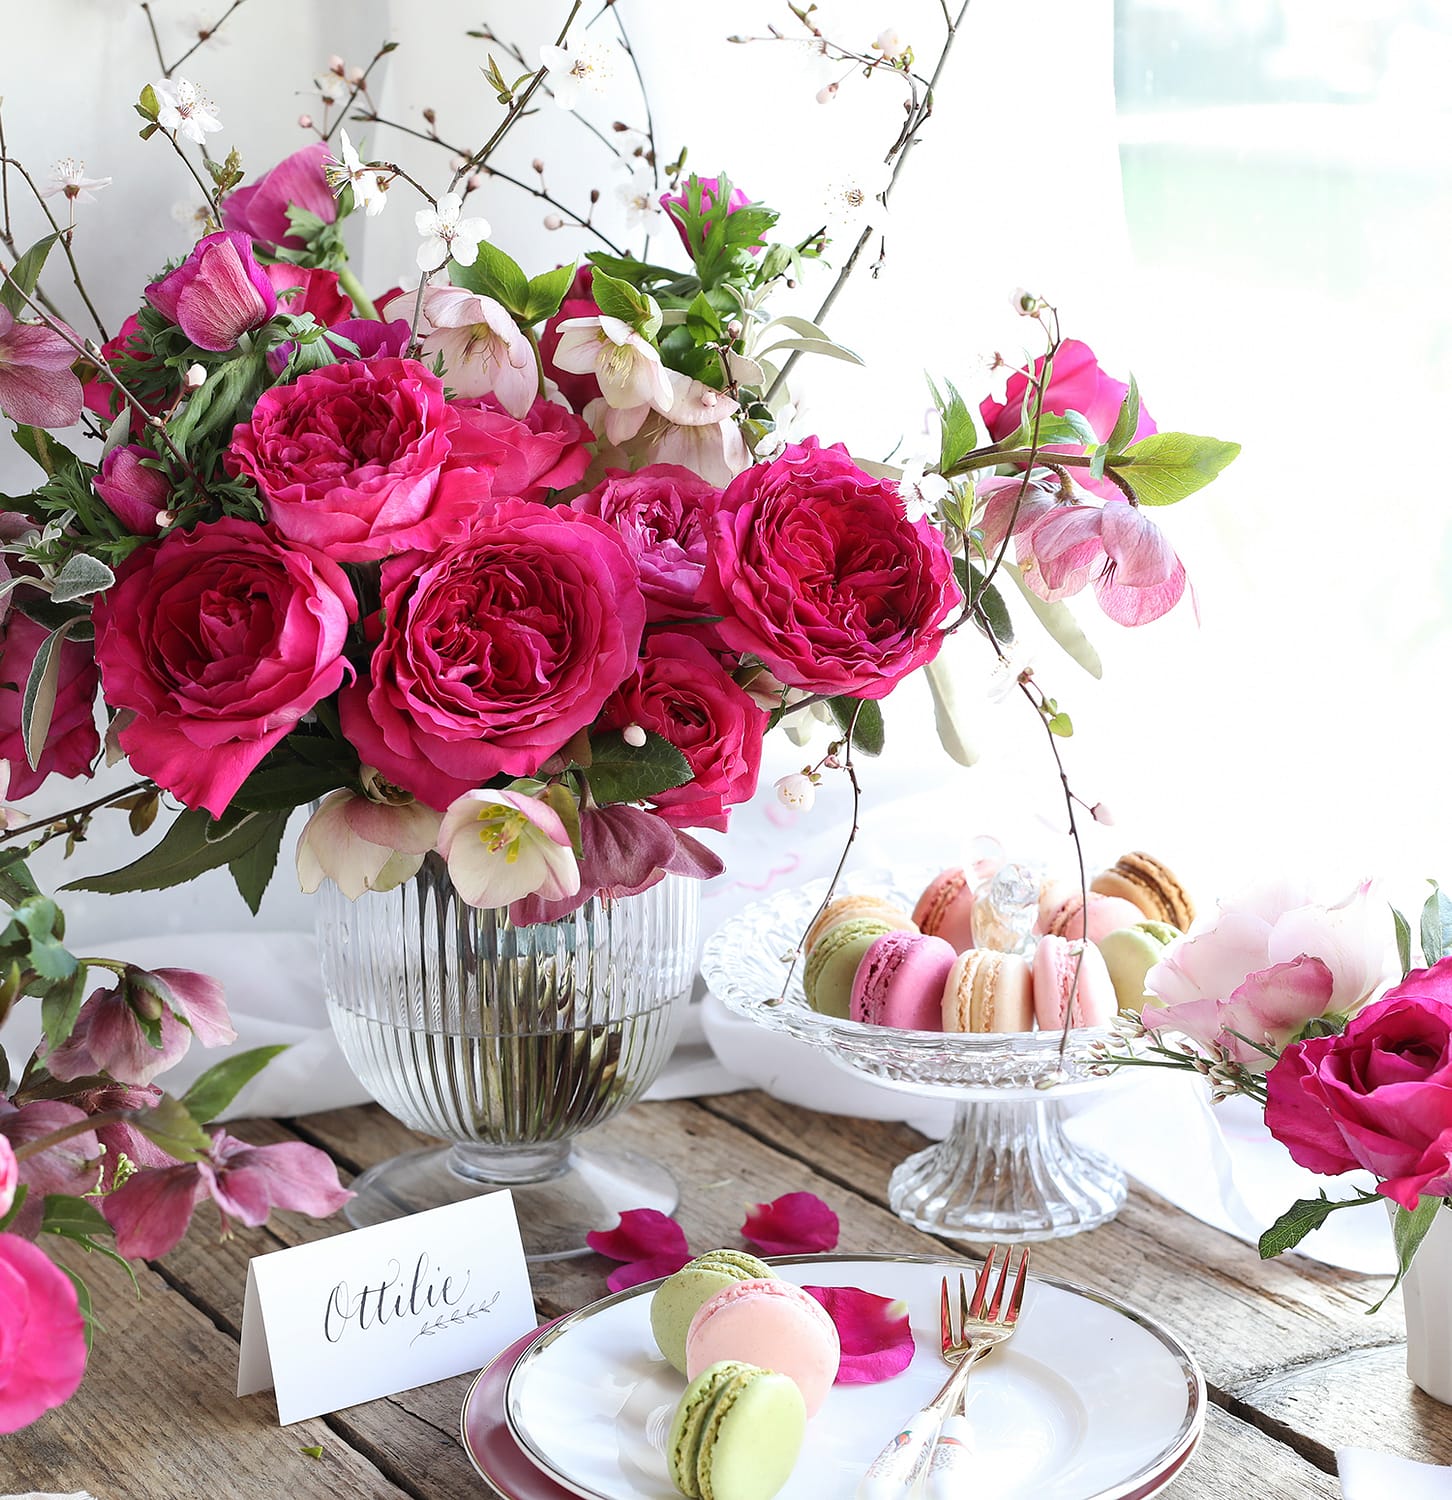 Pink Capability roses gifting celebration ideas